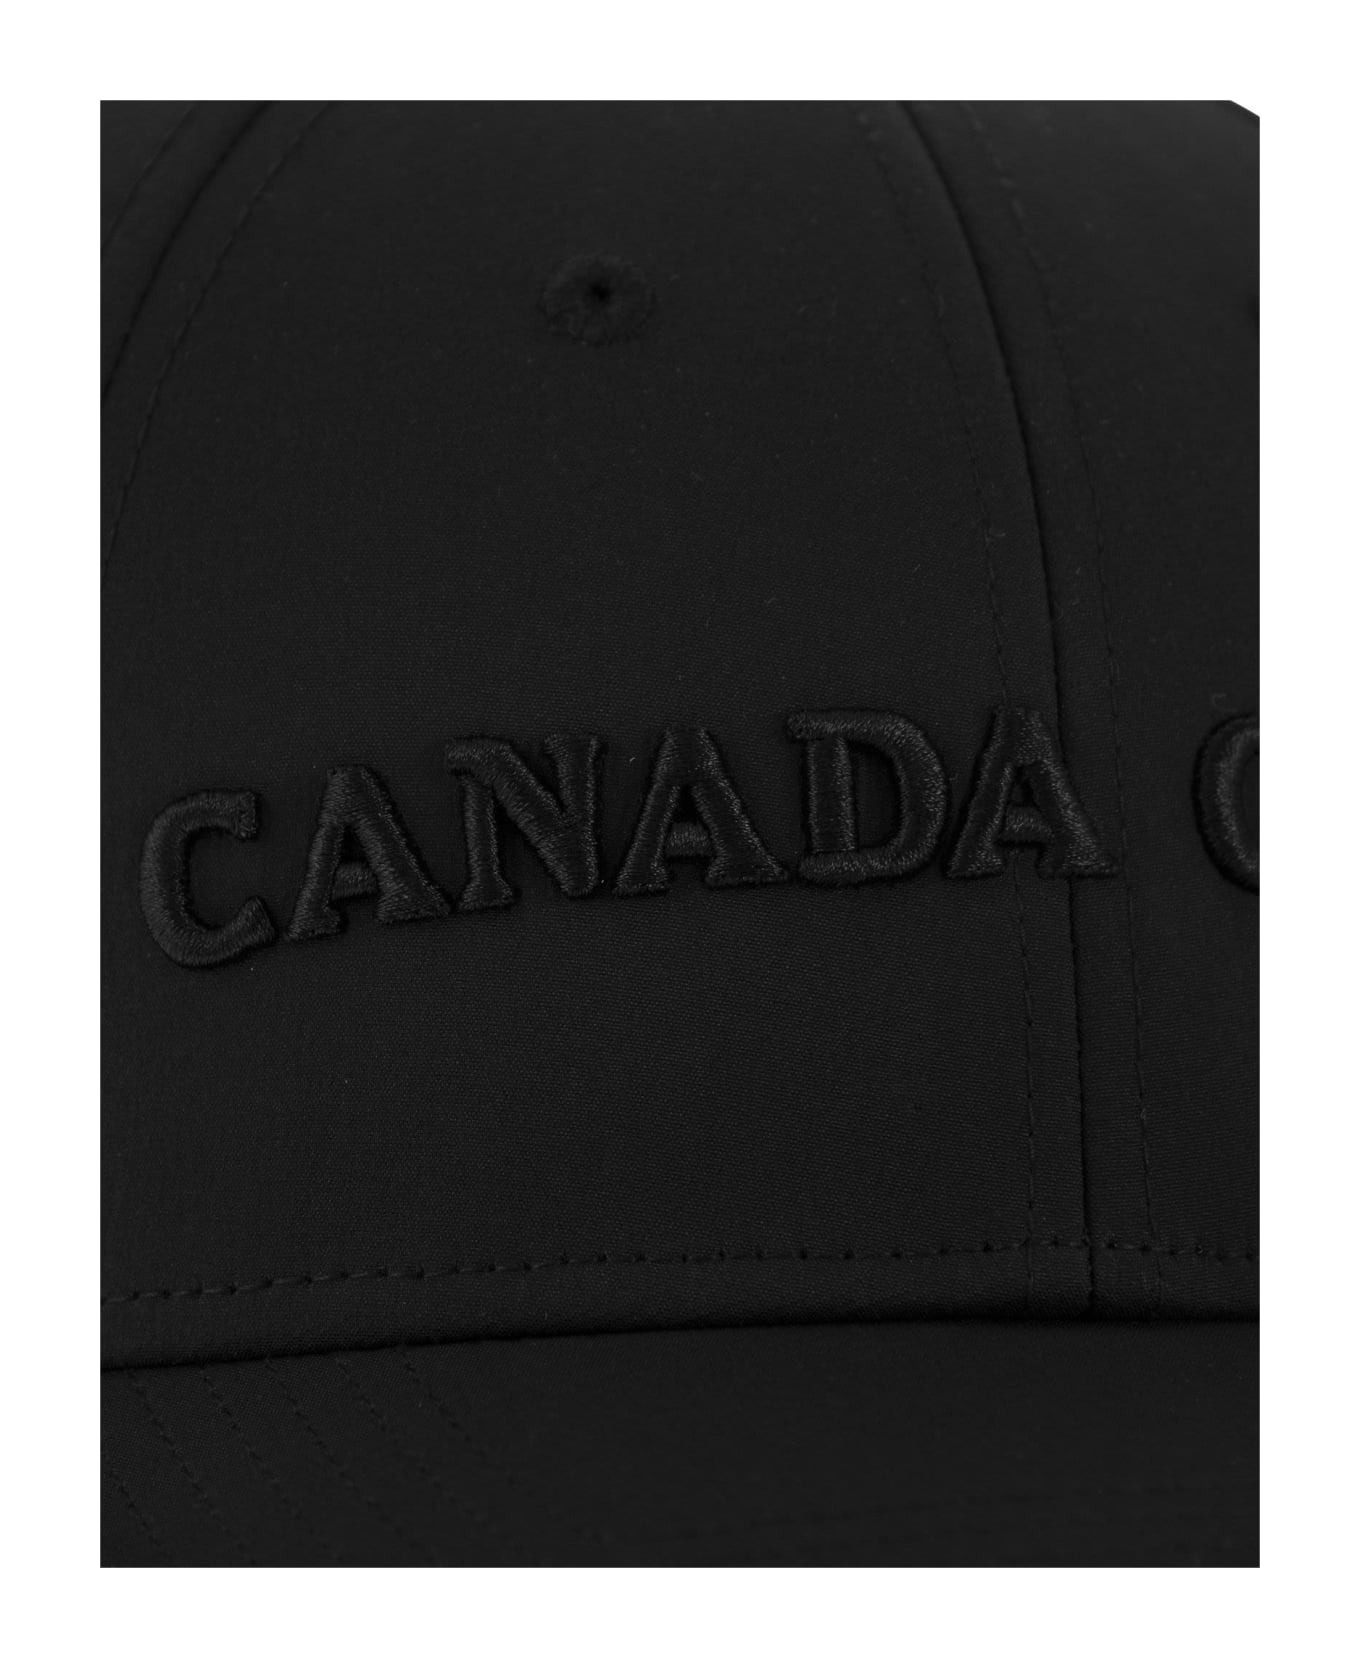 Canada Goose Tech Baseball Cap - Black 帽子